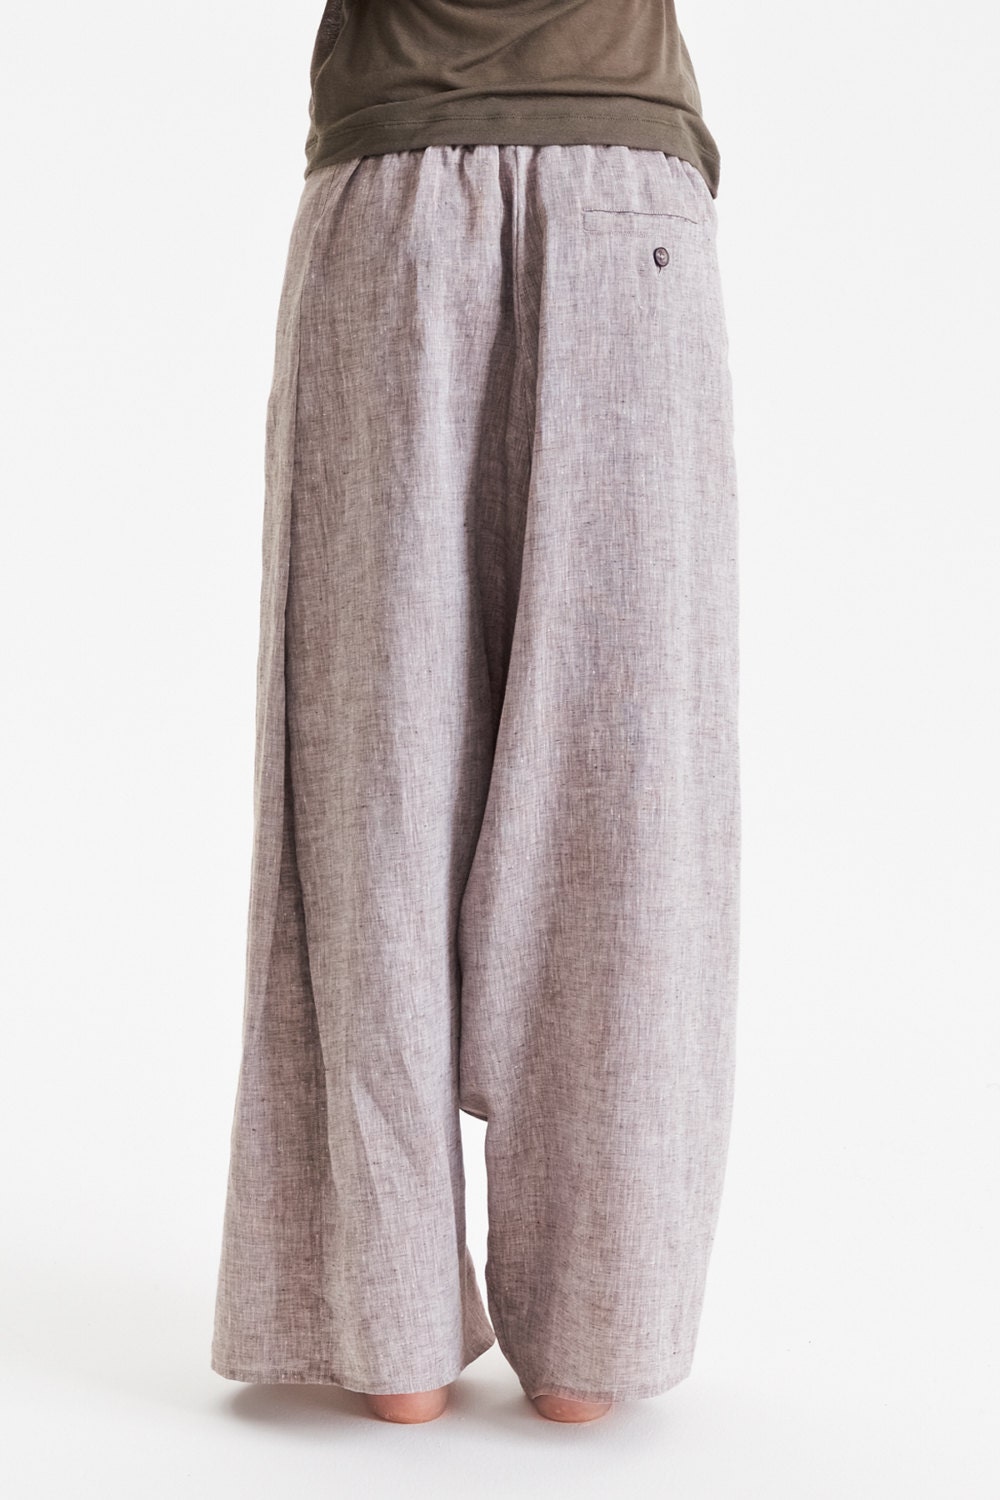 Brown Melange Linen Pants / Extravagant Drop Crotch Pants / - Etsy Canada